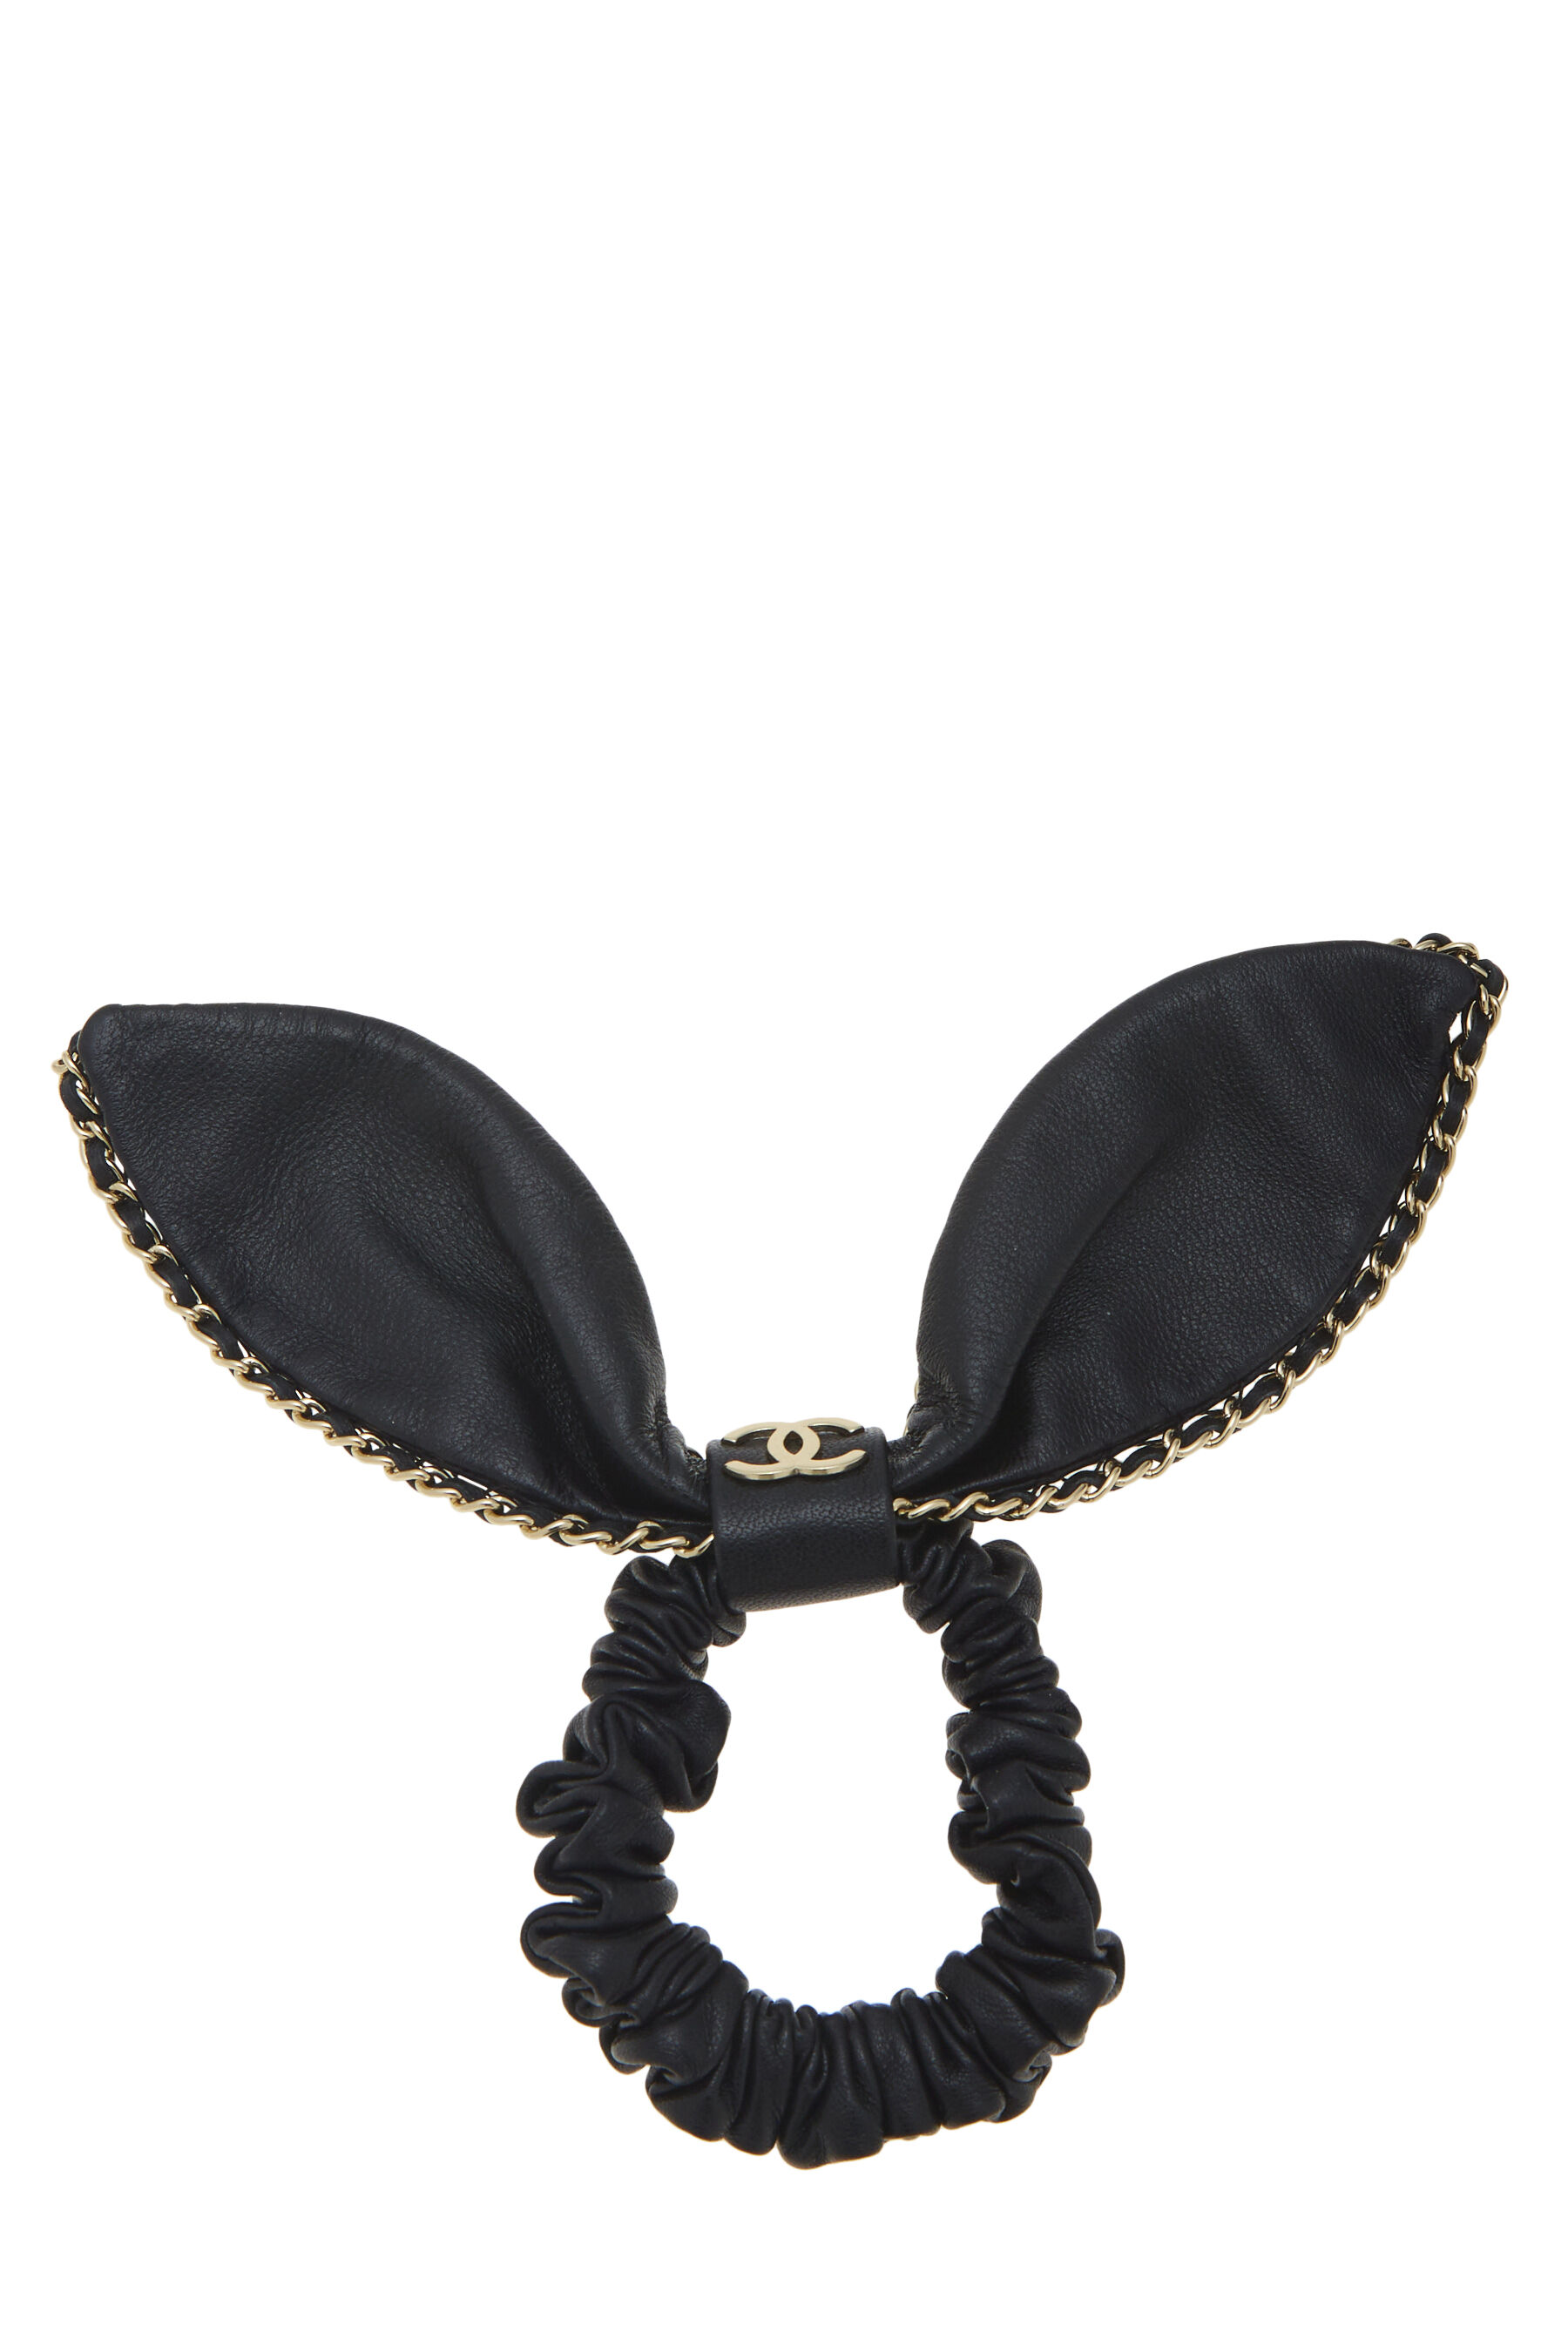 Chanel - Black Lambskin & Gold Chain Hair Bow Tie